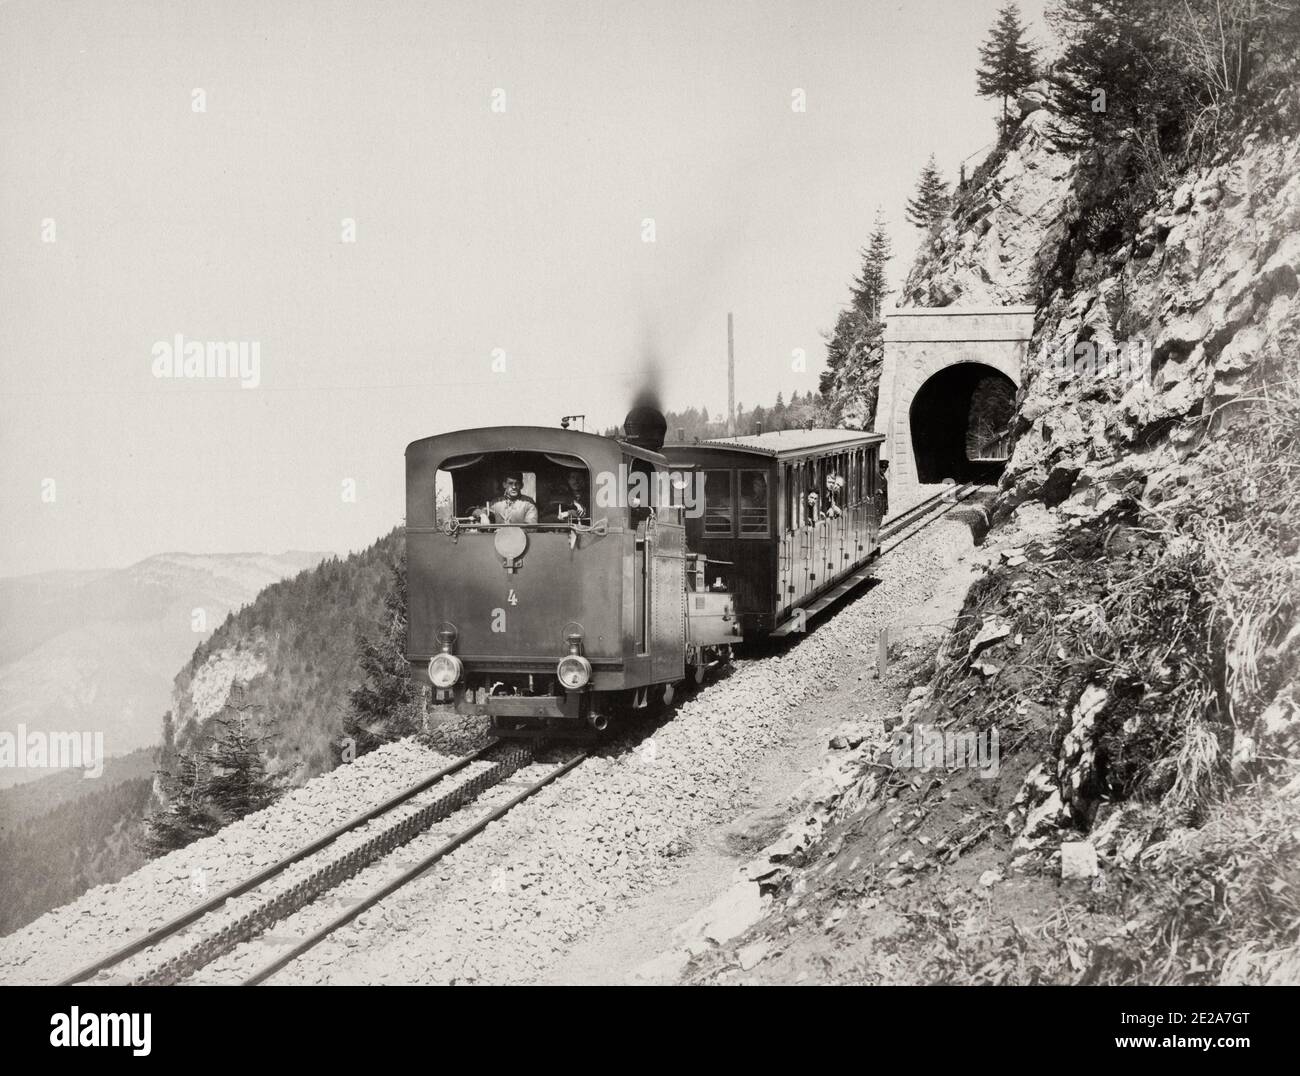 Steam Train 5 Railway Locomotive Poster Wagons Tracks Picture Train Travel Photo